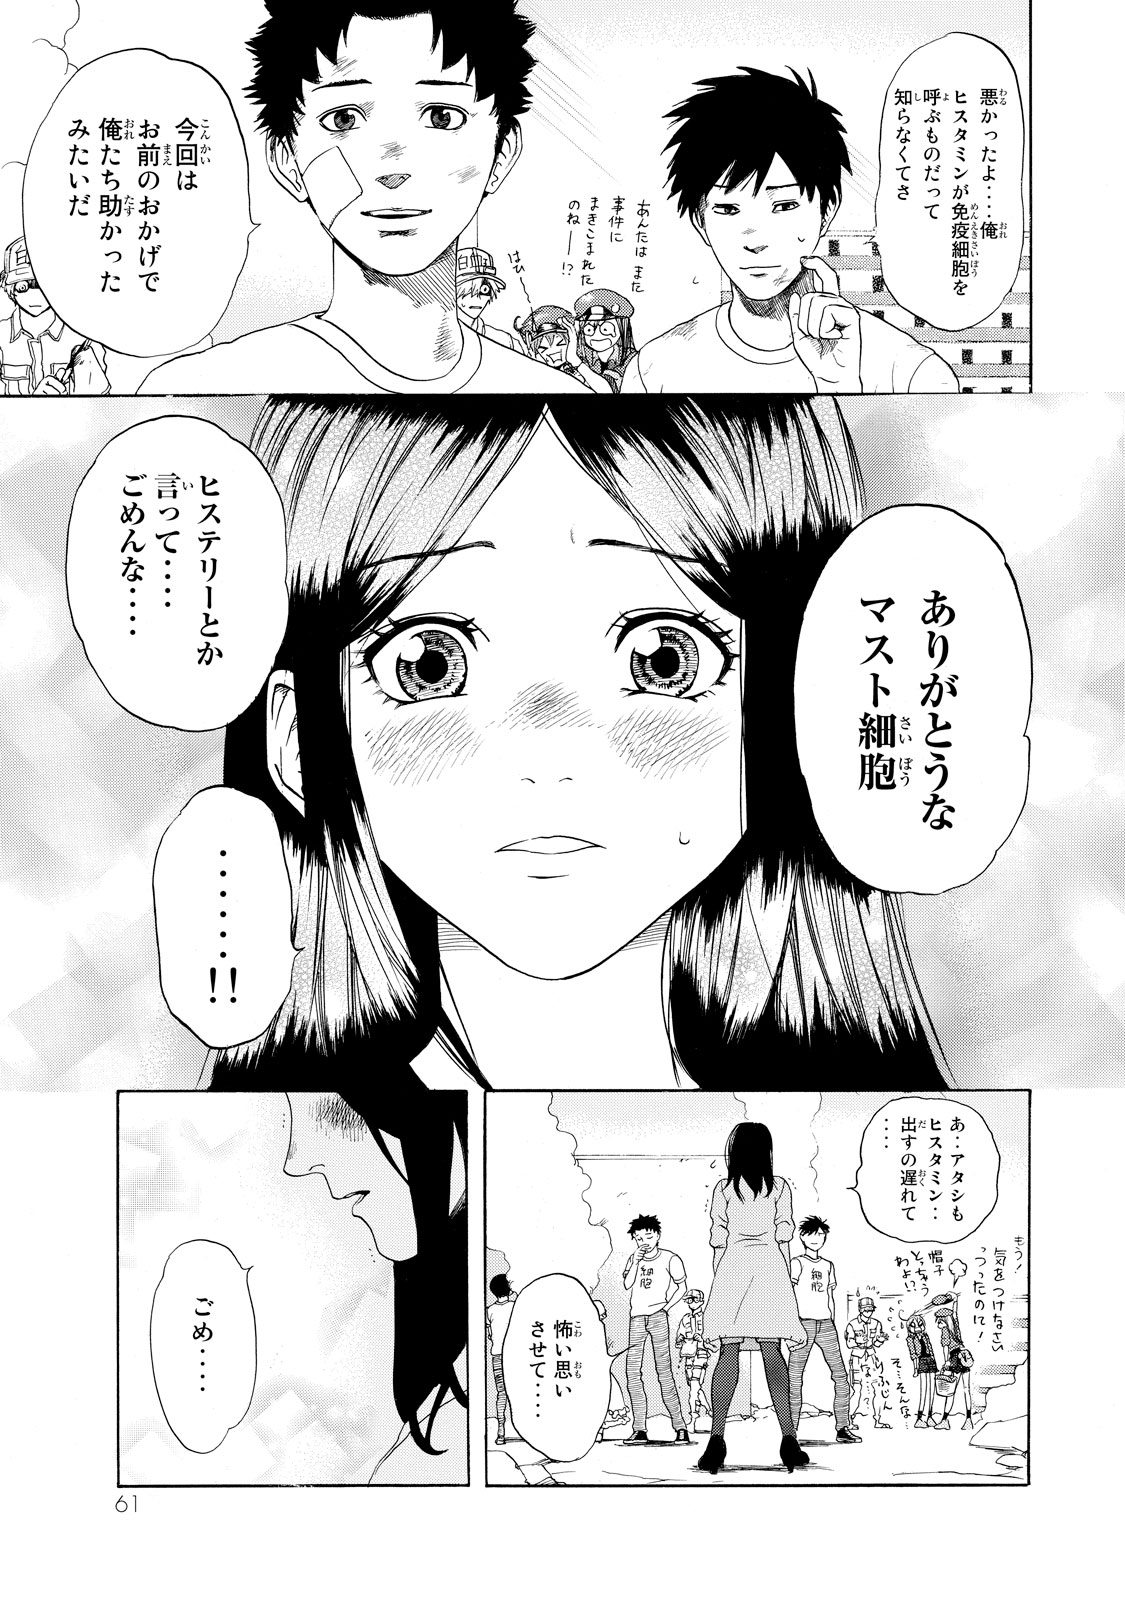 Hataraku Saibou - Chapter 16 - Page 29